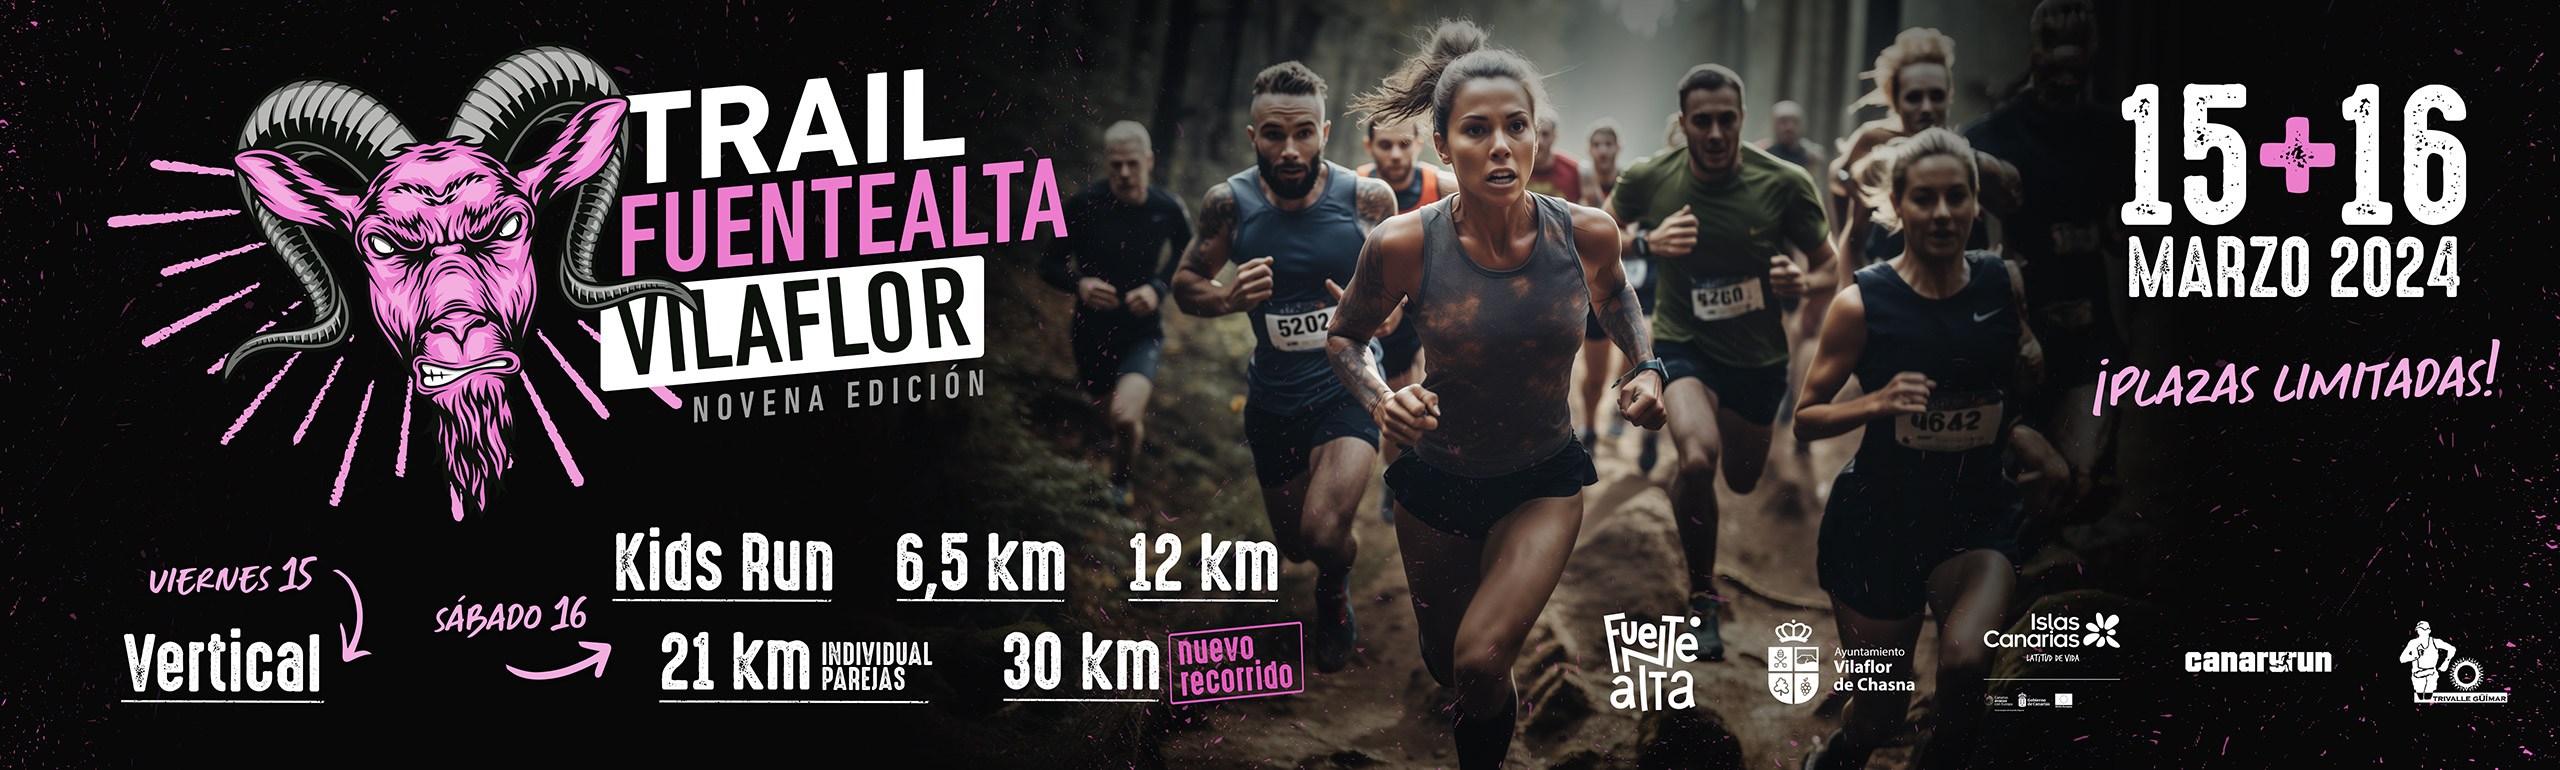 Trail Fuentealta Vilaflor 2024